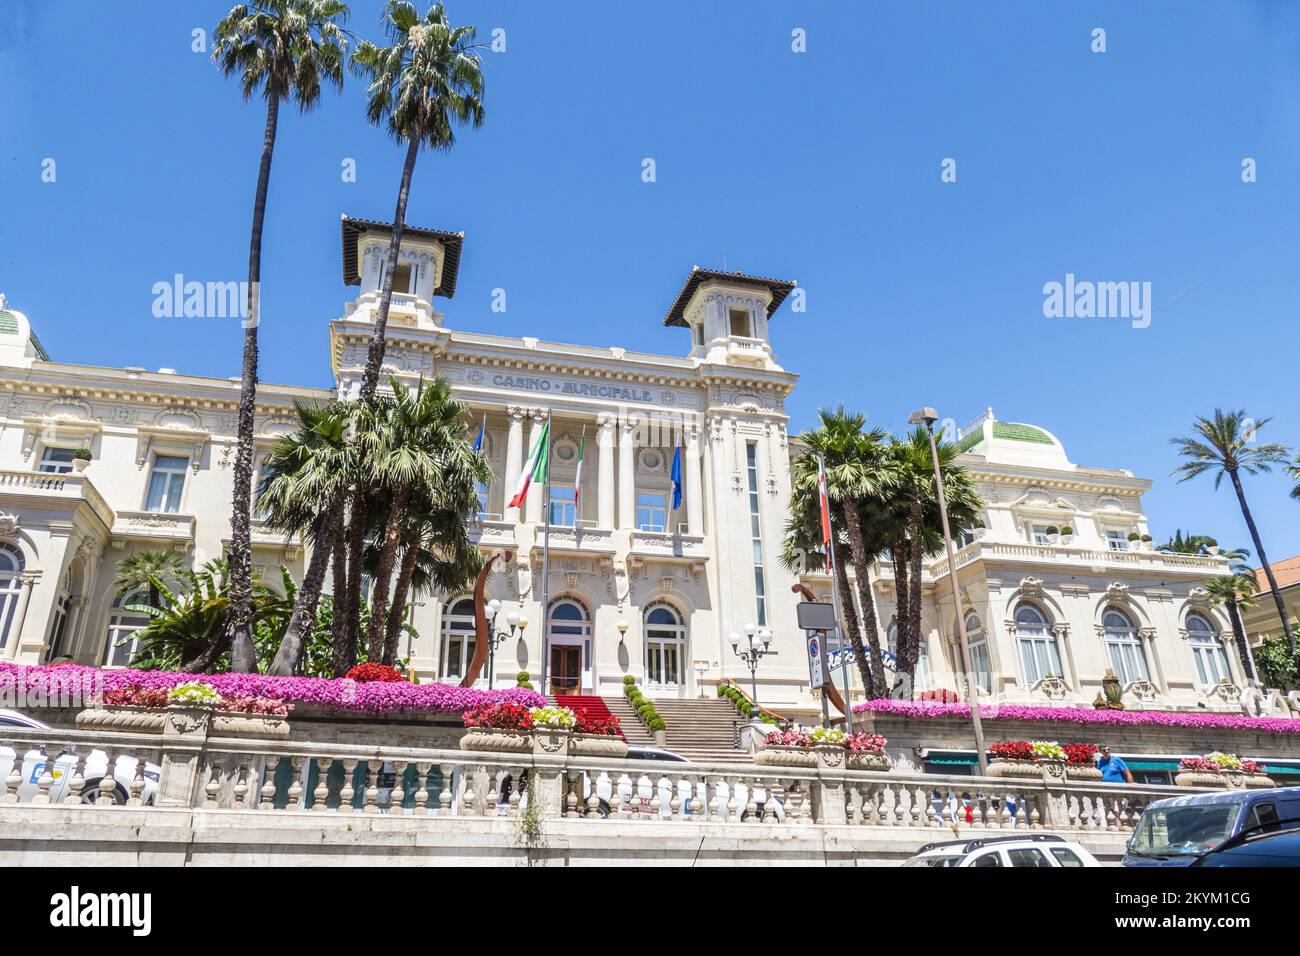 Sanremo, Italy - 07-07-2021: The beautiful Casinò of Sanremo Stock Photo